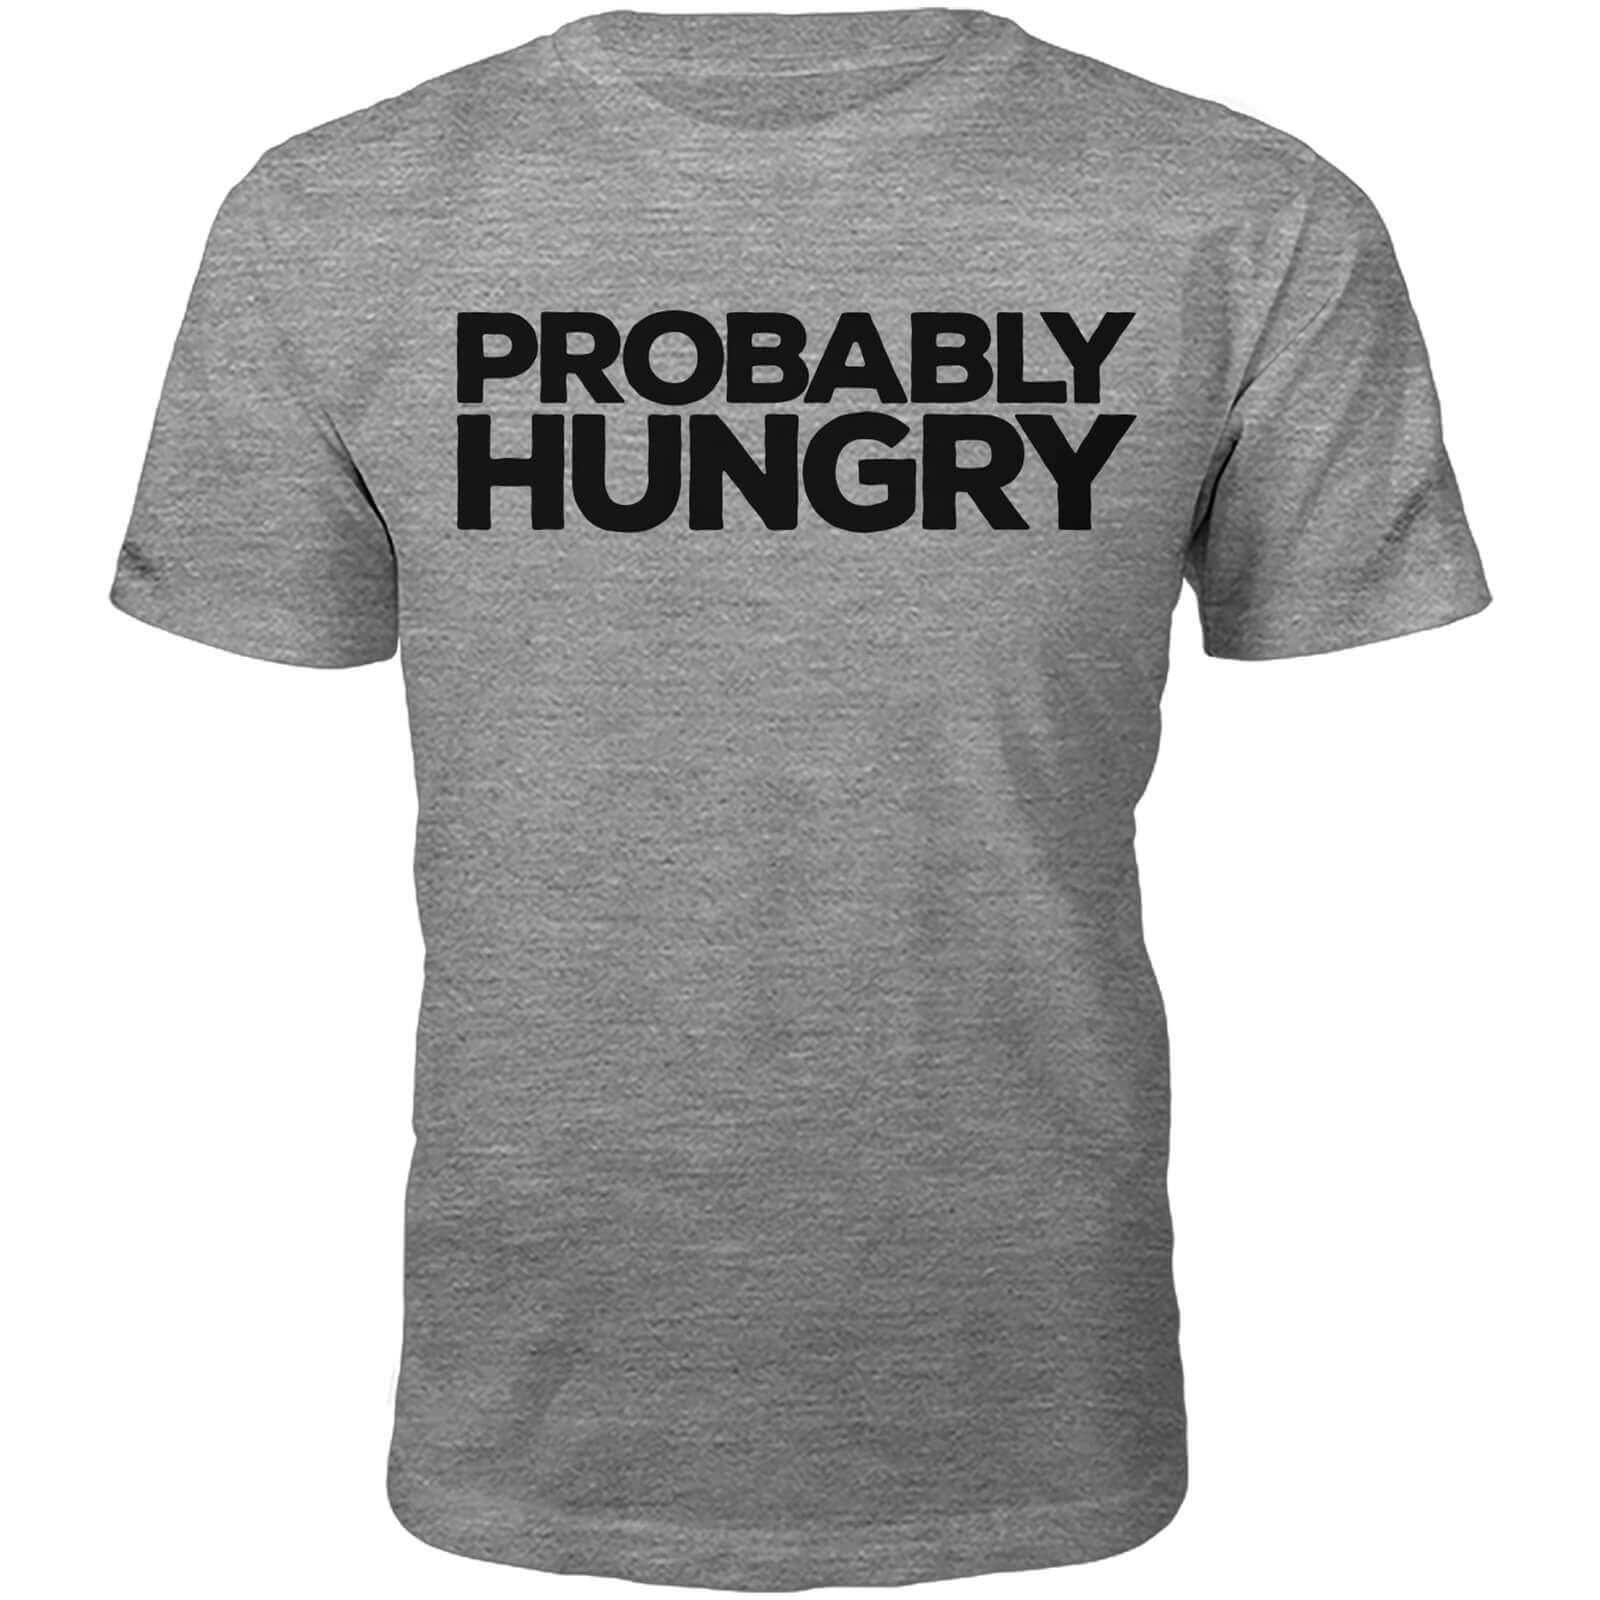 Probably Hungry Slogan T-Shirt - Grey - S - Grey